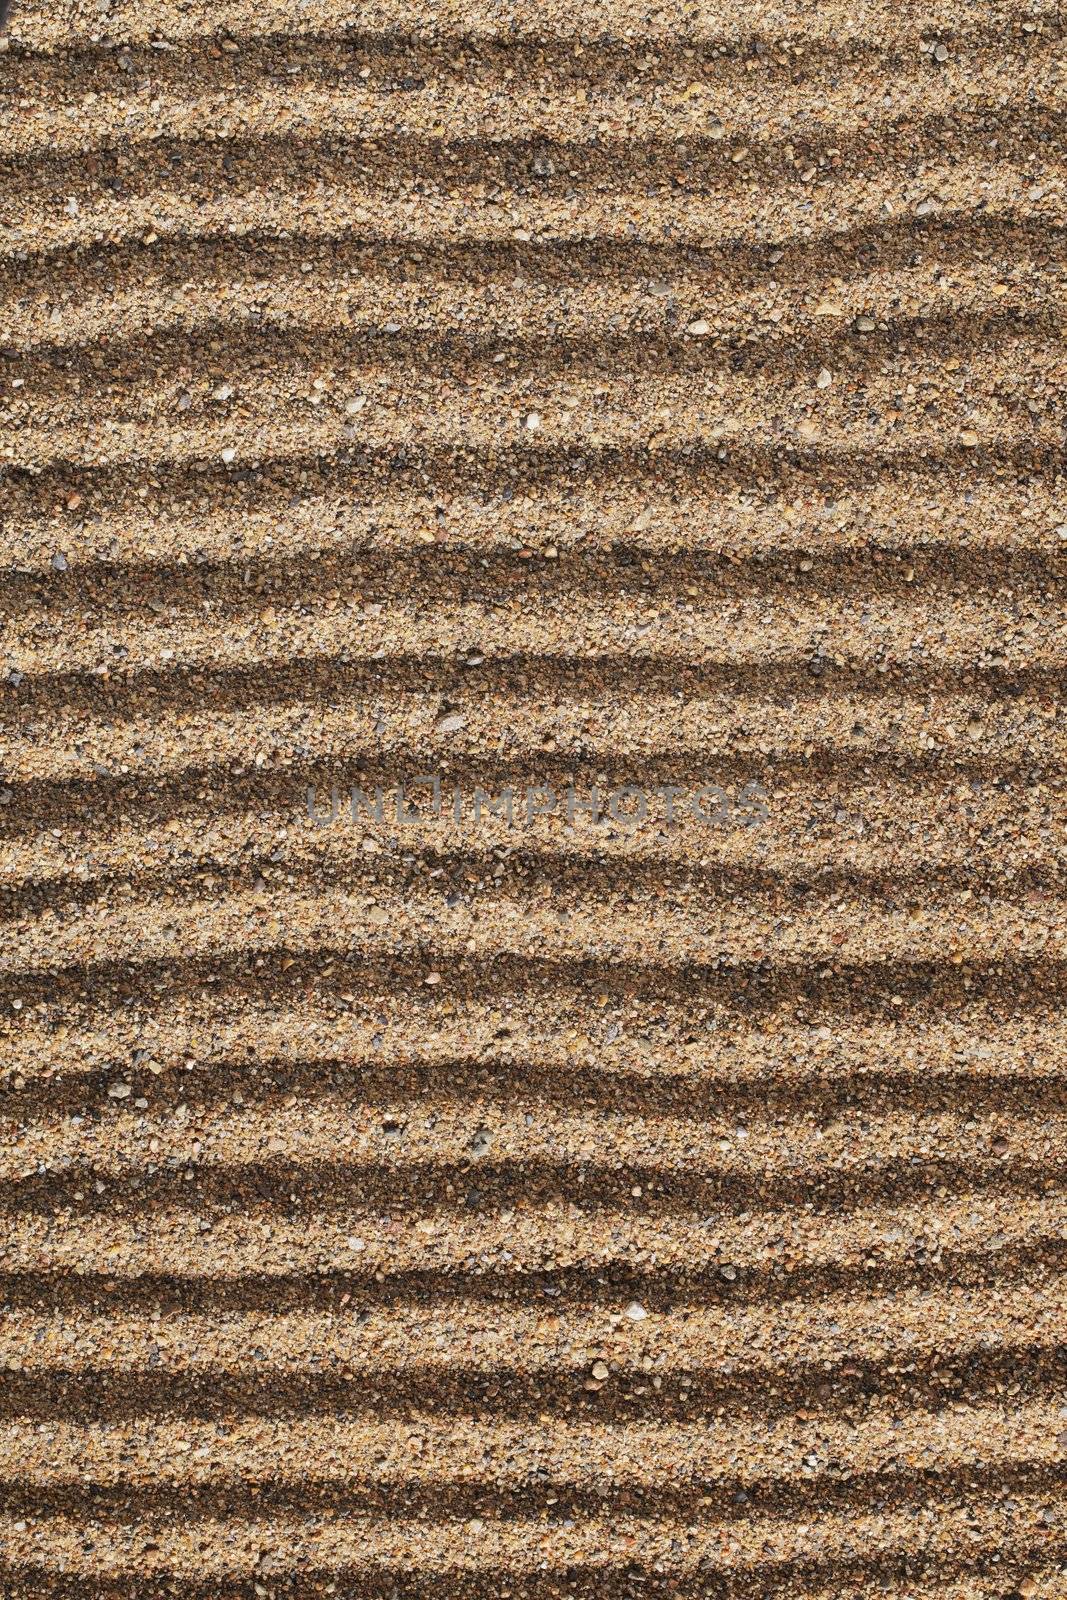 Horizontal lines drawn into coarse sea sand.